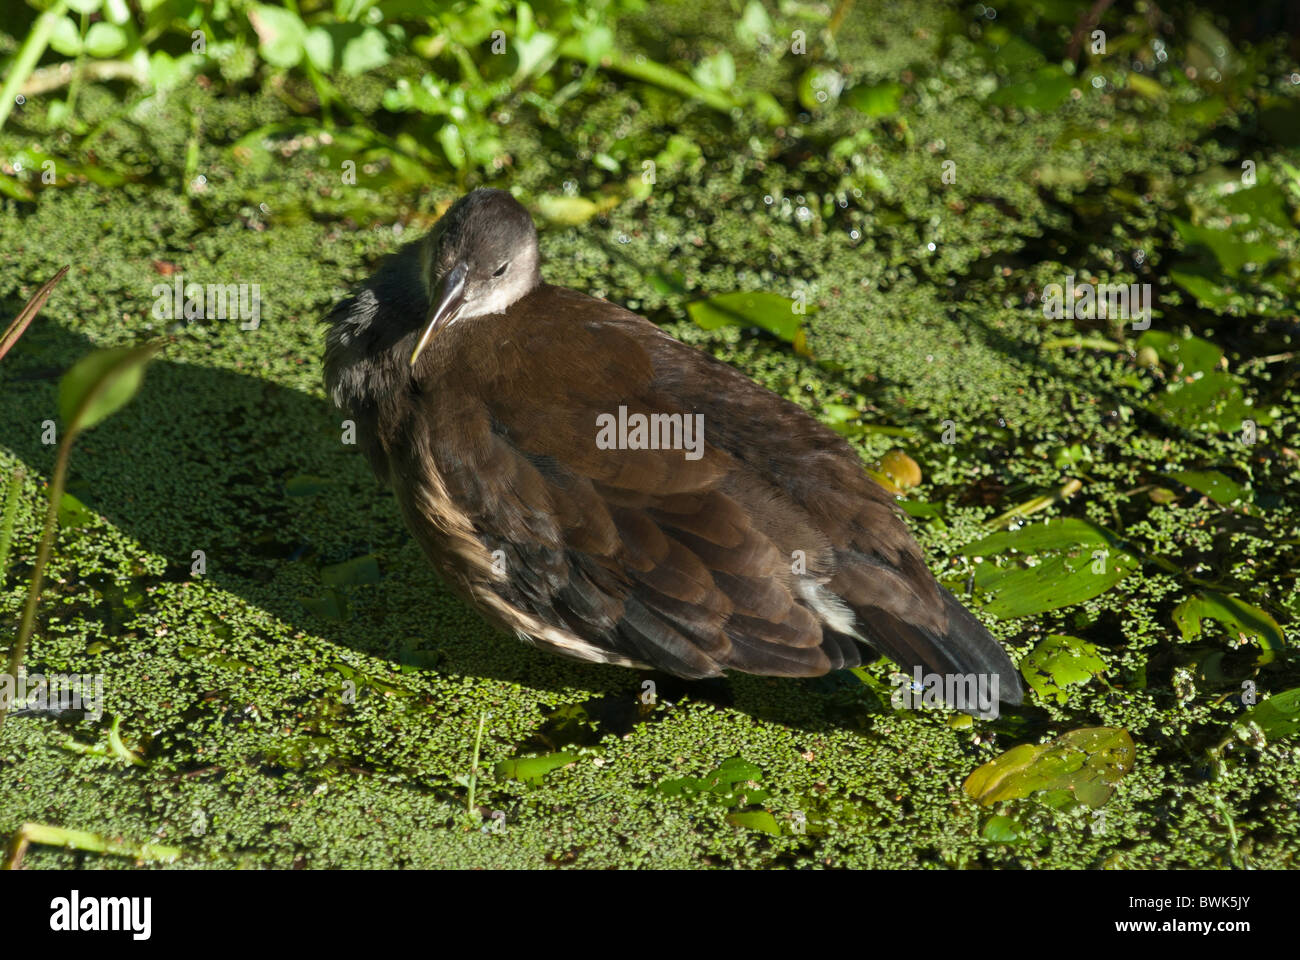 Young Moorhen Gallinus Chlorophus in duck weed. Family Rallidae Stock Photo